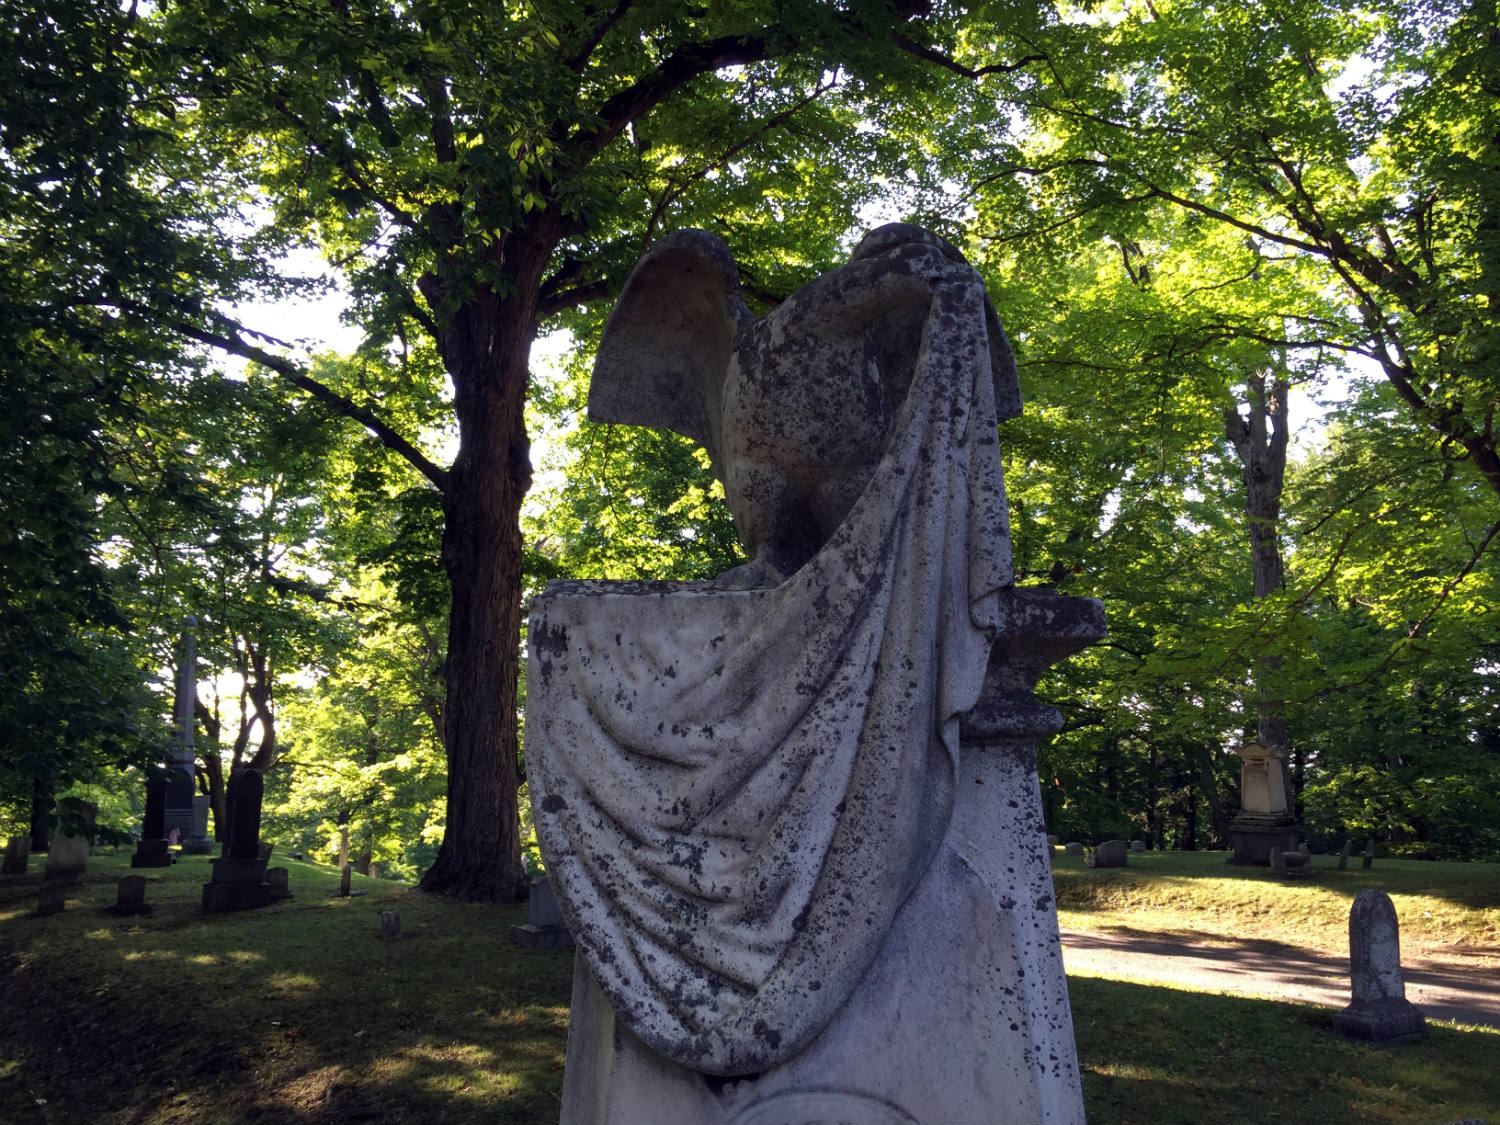 Headstone in Mt. Albion Cemetery